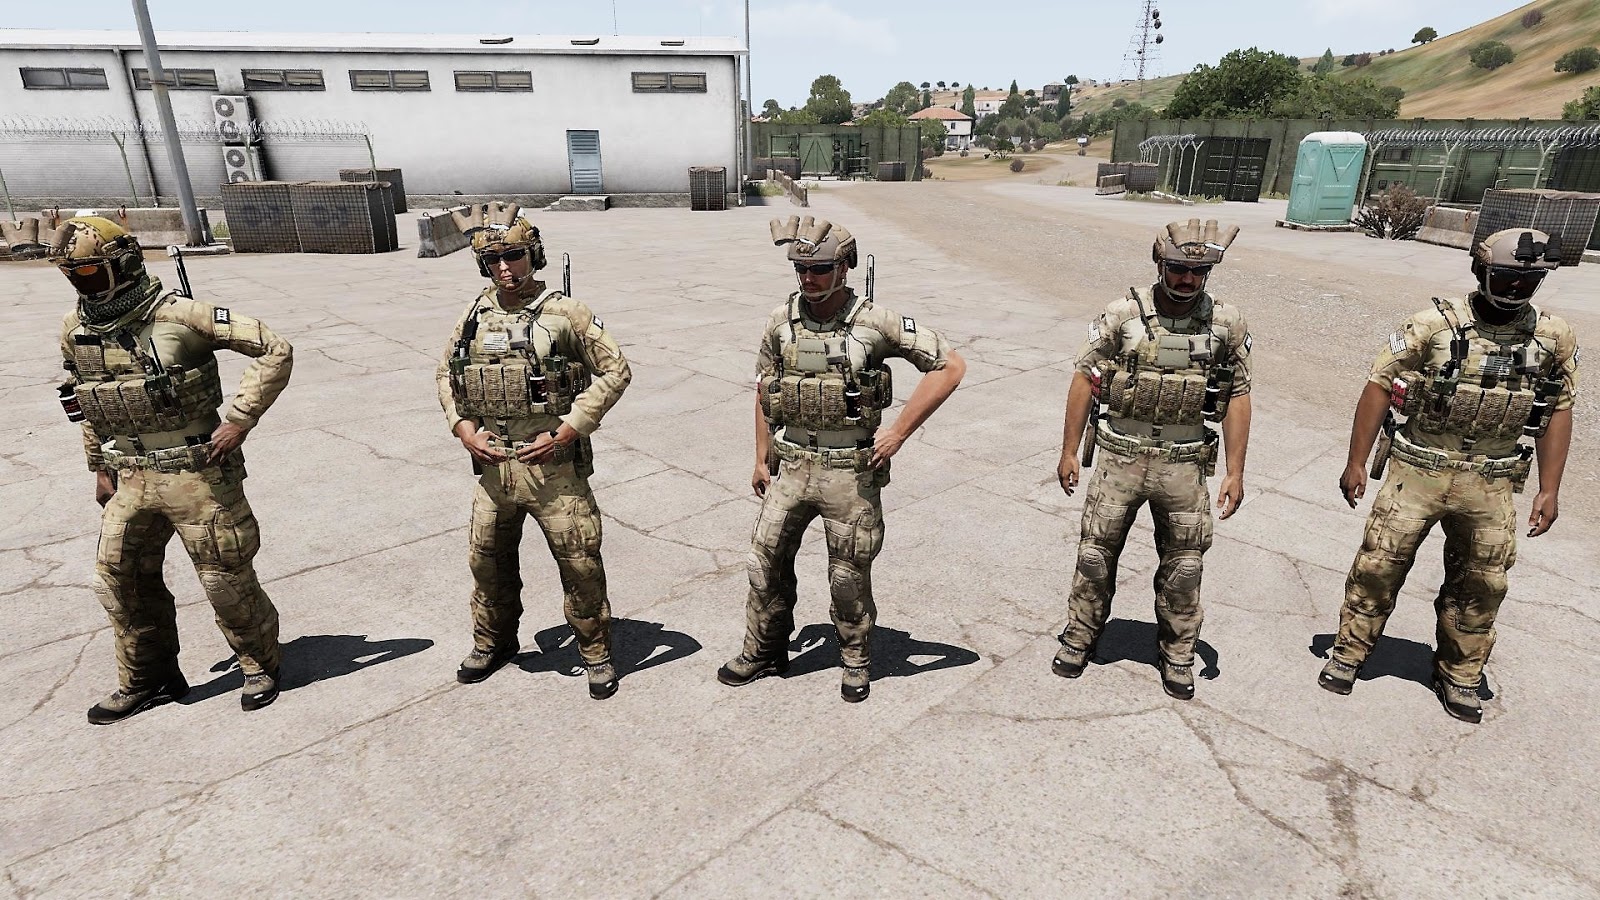 Jsoc. SSO uniforms Arma 3. JSOC спецназ. Арма 3 униформа новая. Sof uniform Arma 3.